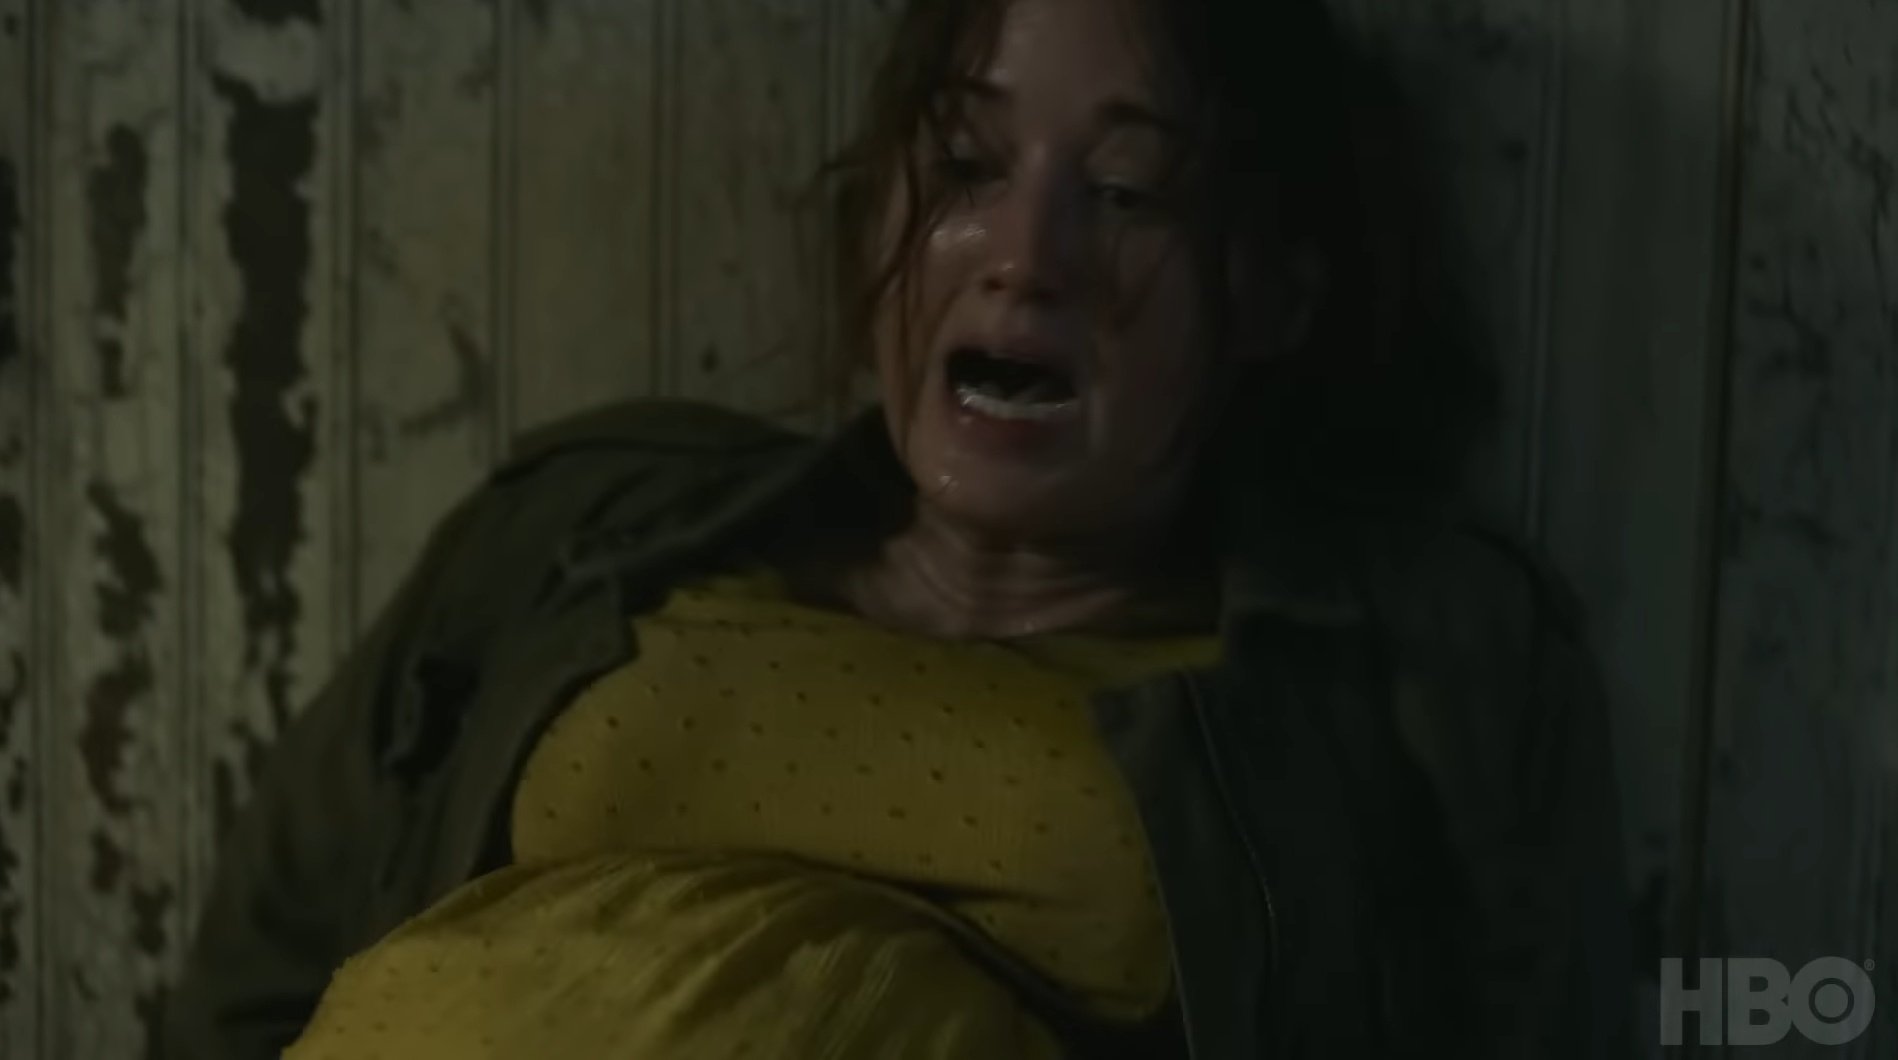 Descubra quem é Ashley Johnson, a mãe de Ellie em “The Last Of Us” - POPline